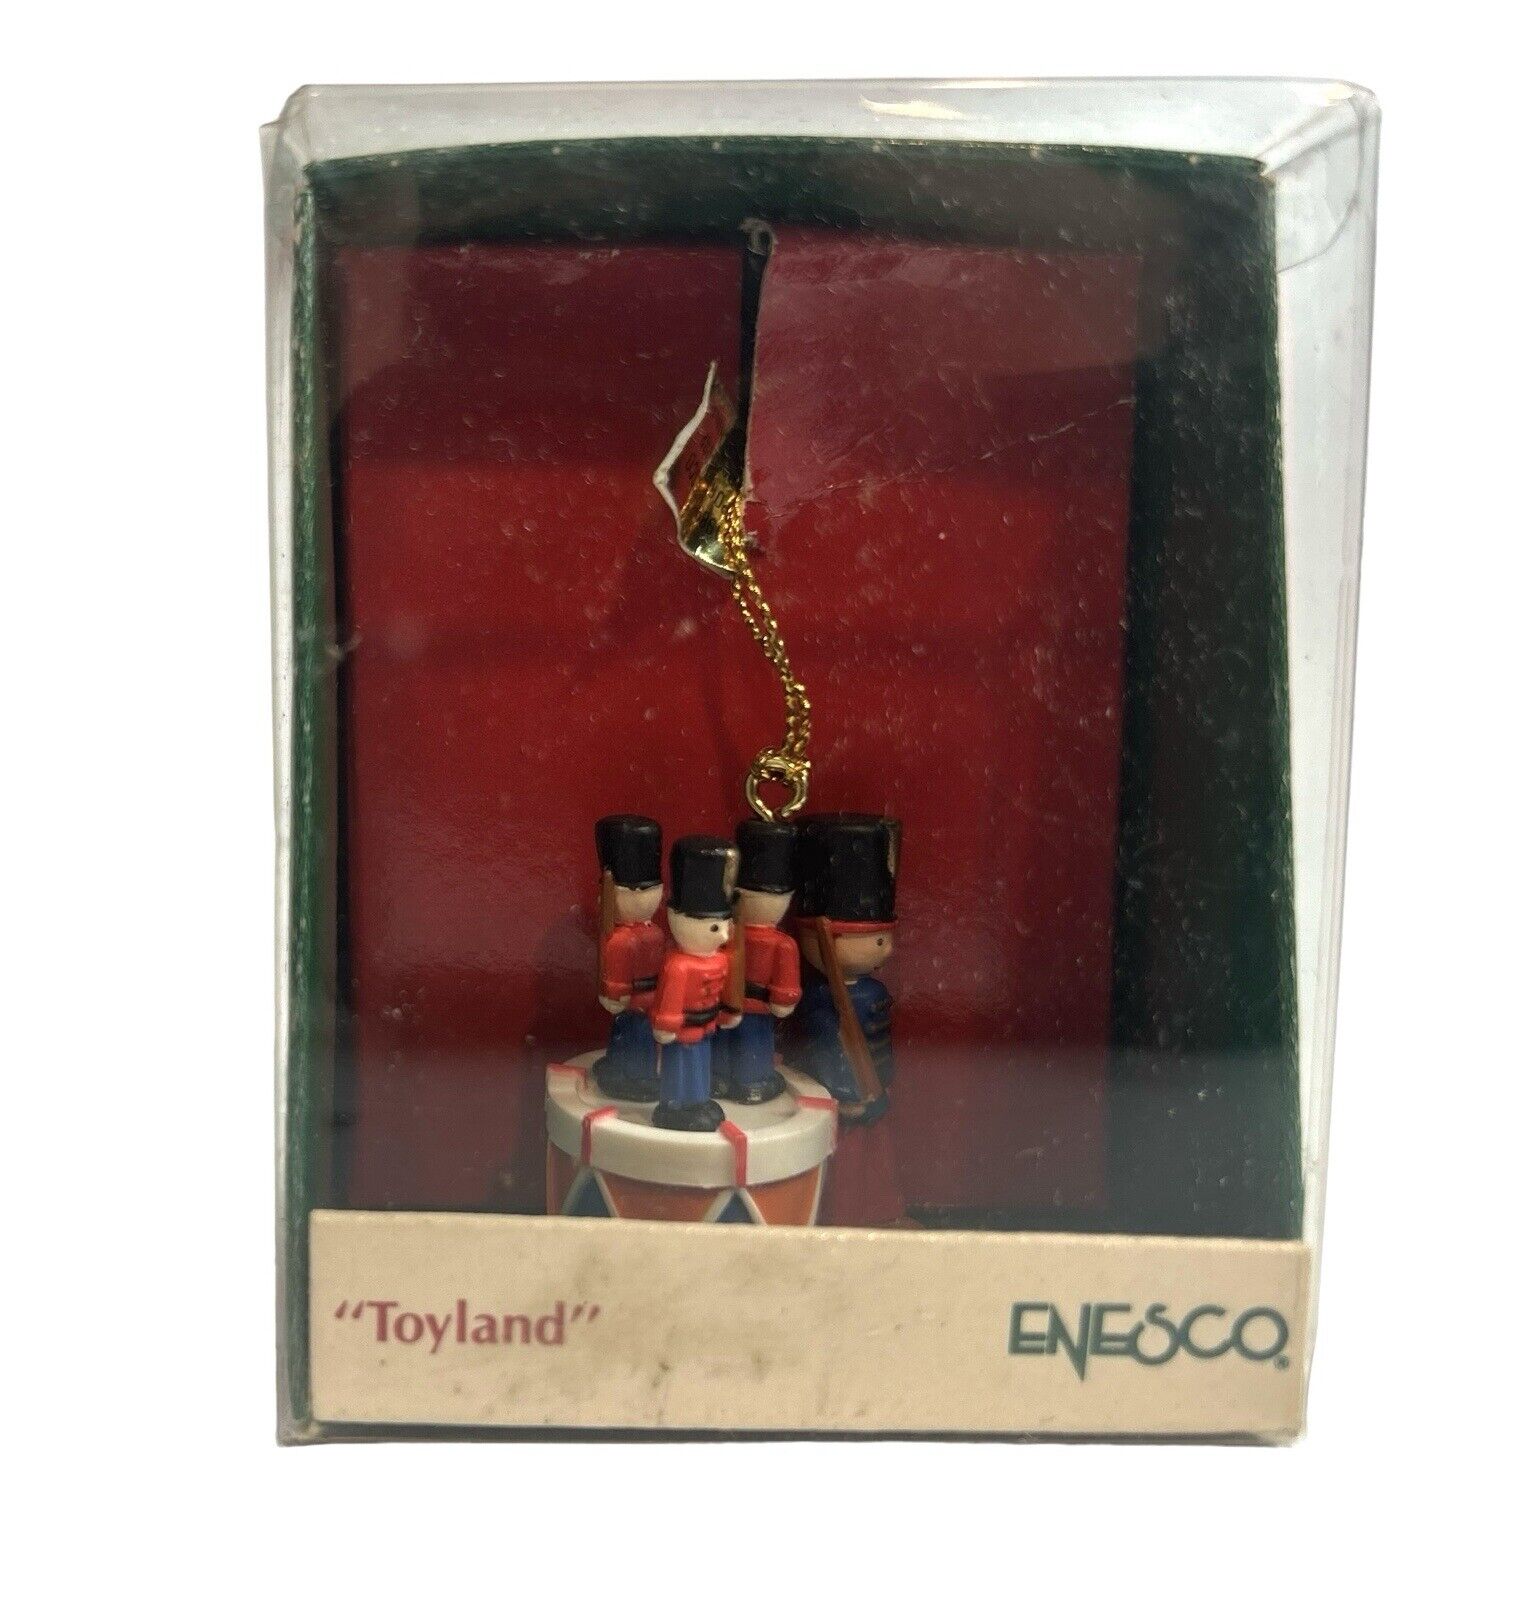 VTG 1989 Enesco Toyland Miniature Ornament Drummer Toy Soldiers 566705